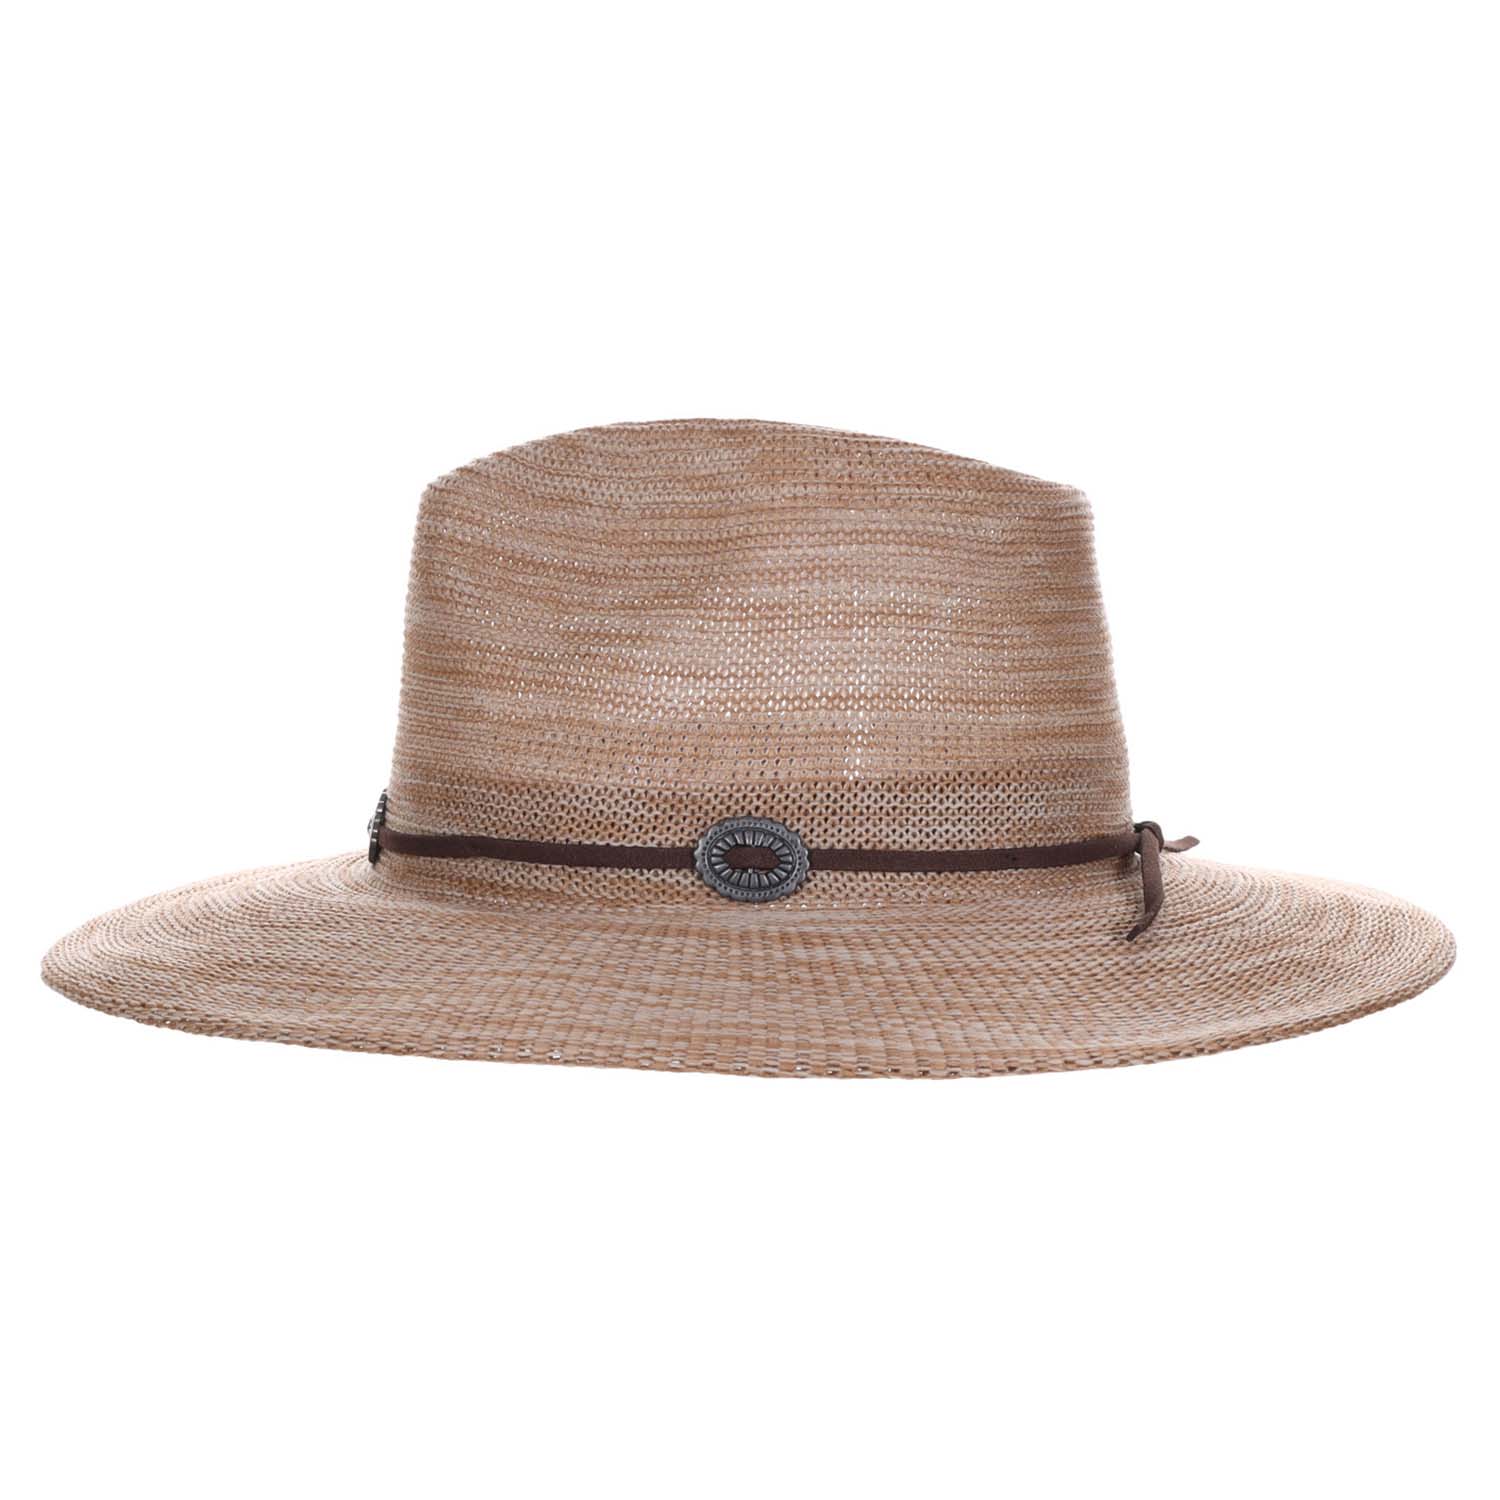 Space Dyed Knit Safari Hat with Conchos - Scala Pronto Safari Hat Scala Hats    